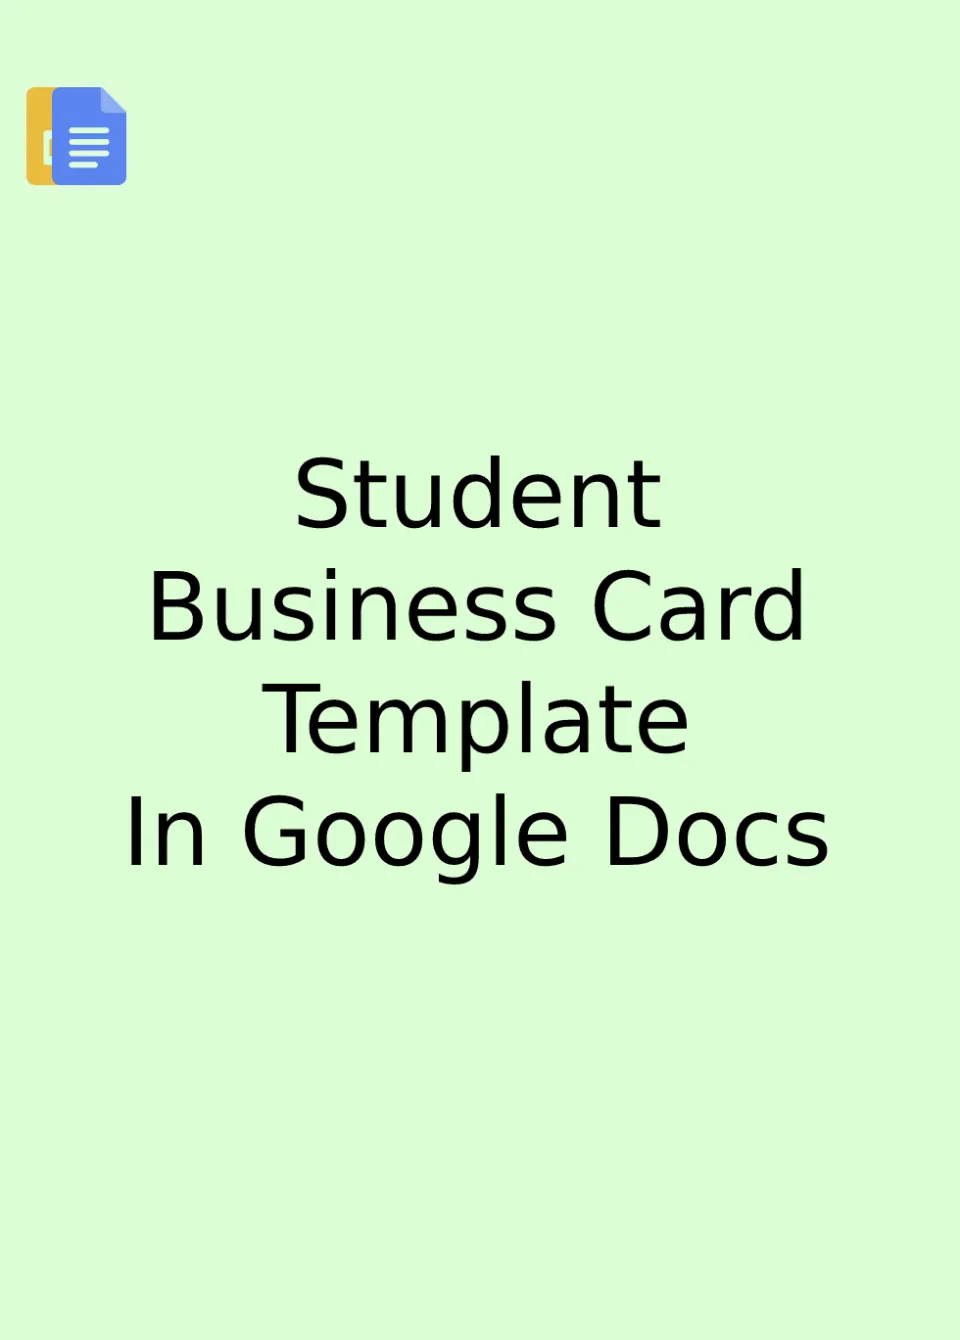 Student Business Card Template Google Docs